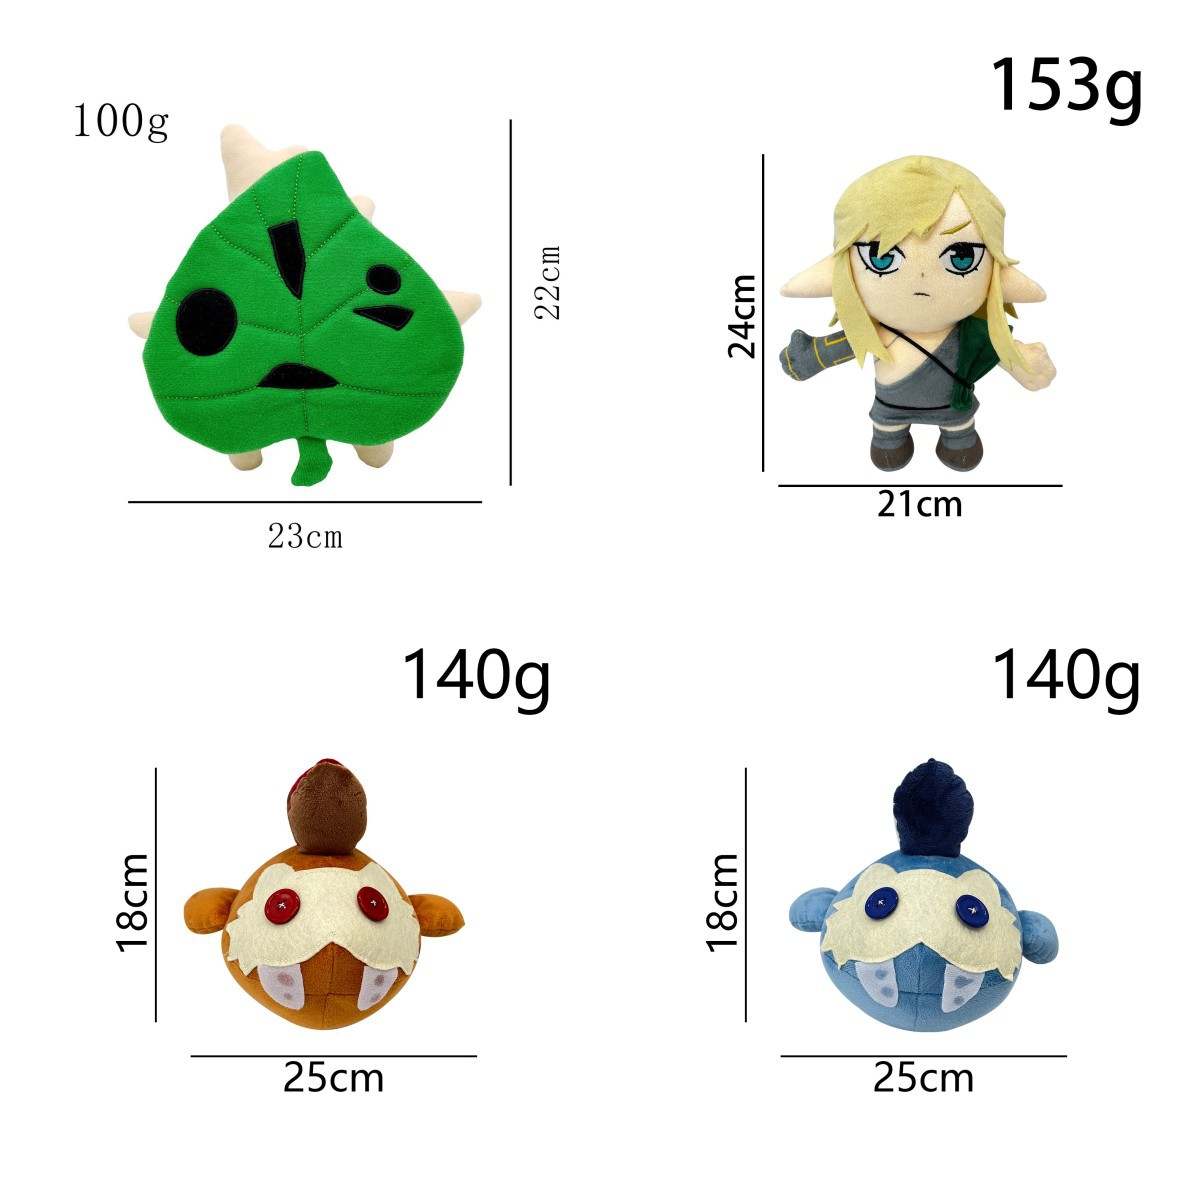 27-30cm New The Legend of Zelda Plush Stuffed Toys Game Periphery